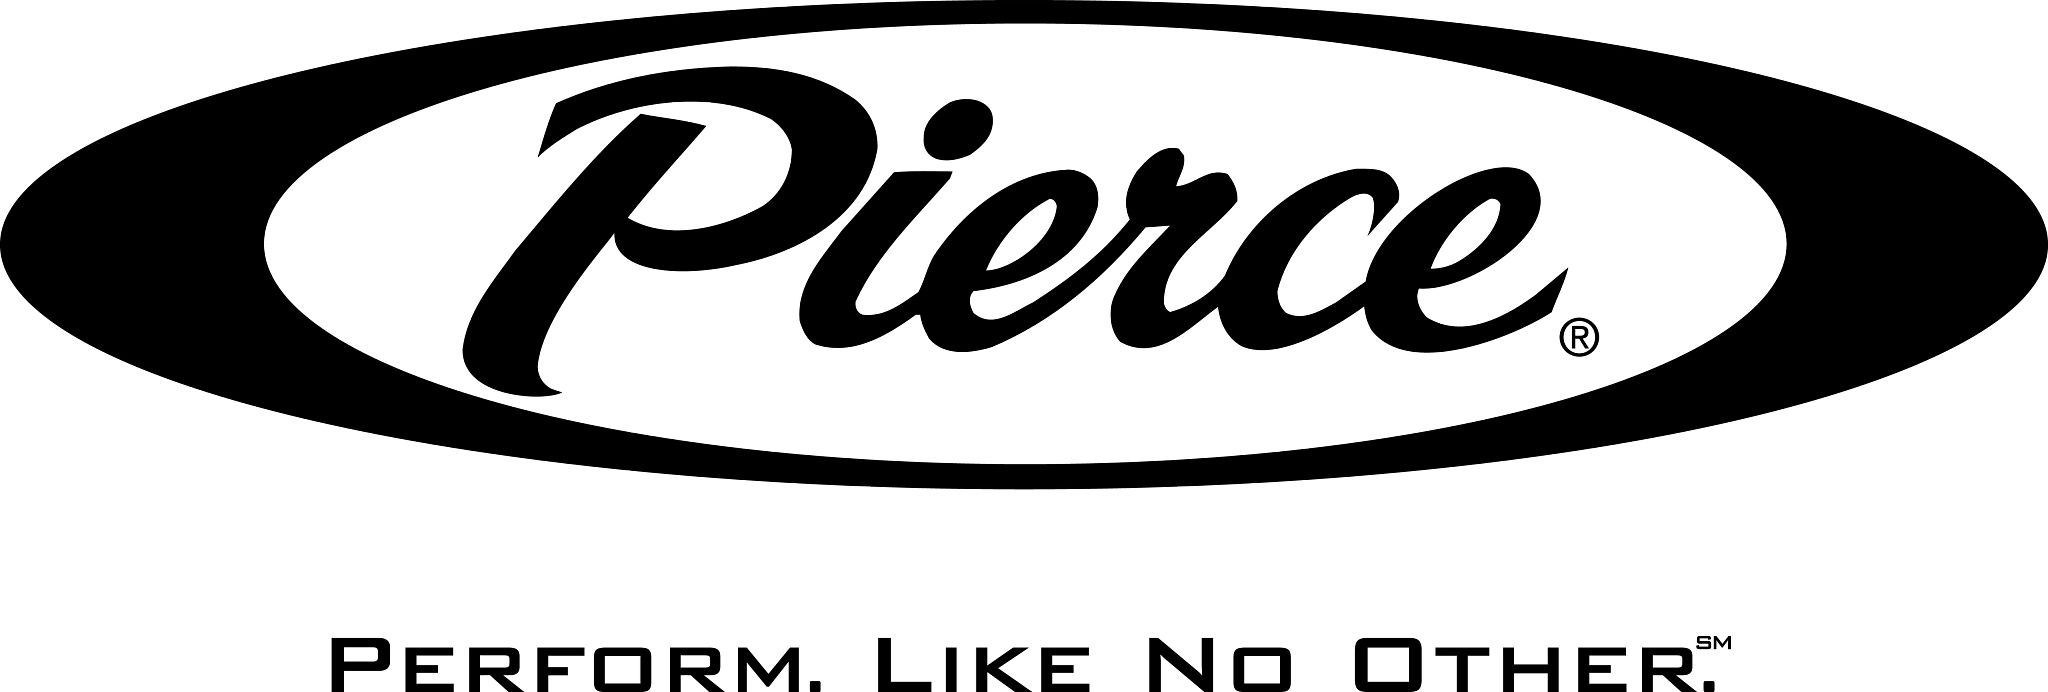 Pierce_VTEX_B2B ecommerce